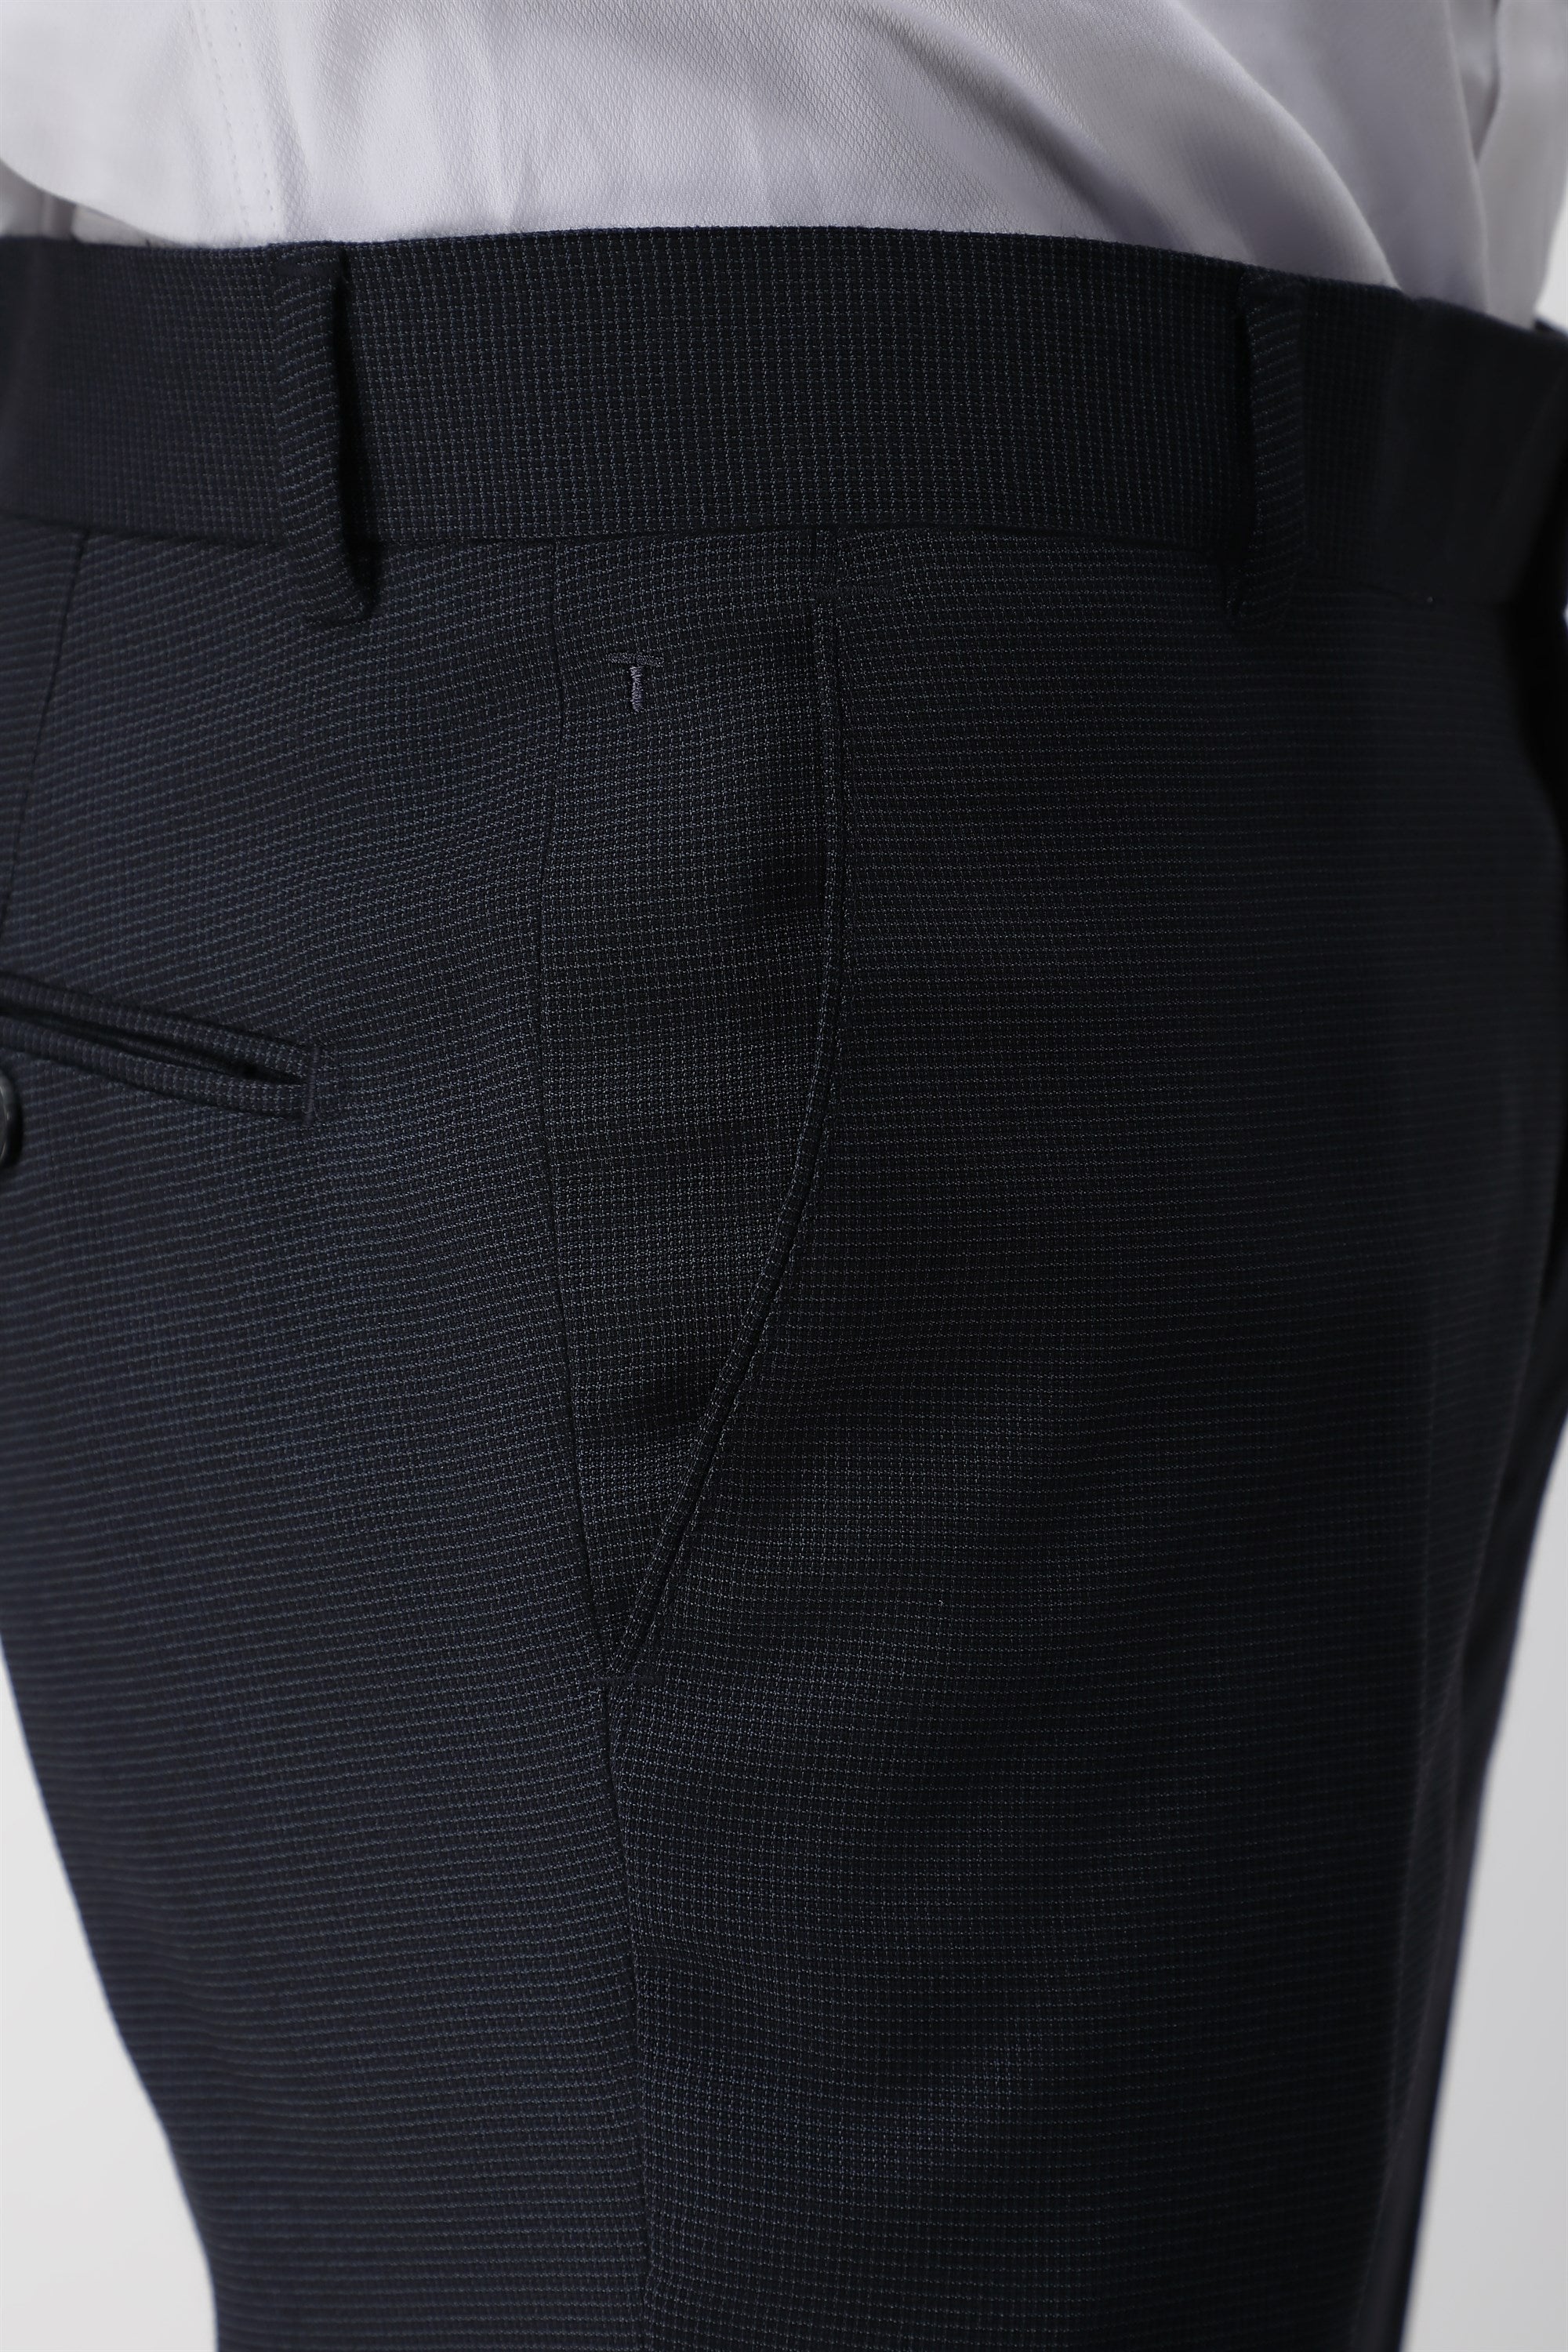 Westport Black 3Sixty5 Stretch Wool Flat Front Suit Pants - Westport Big &  Tall